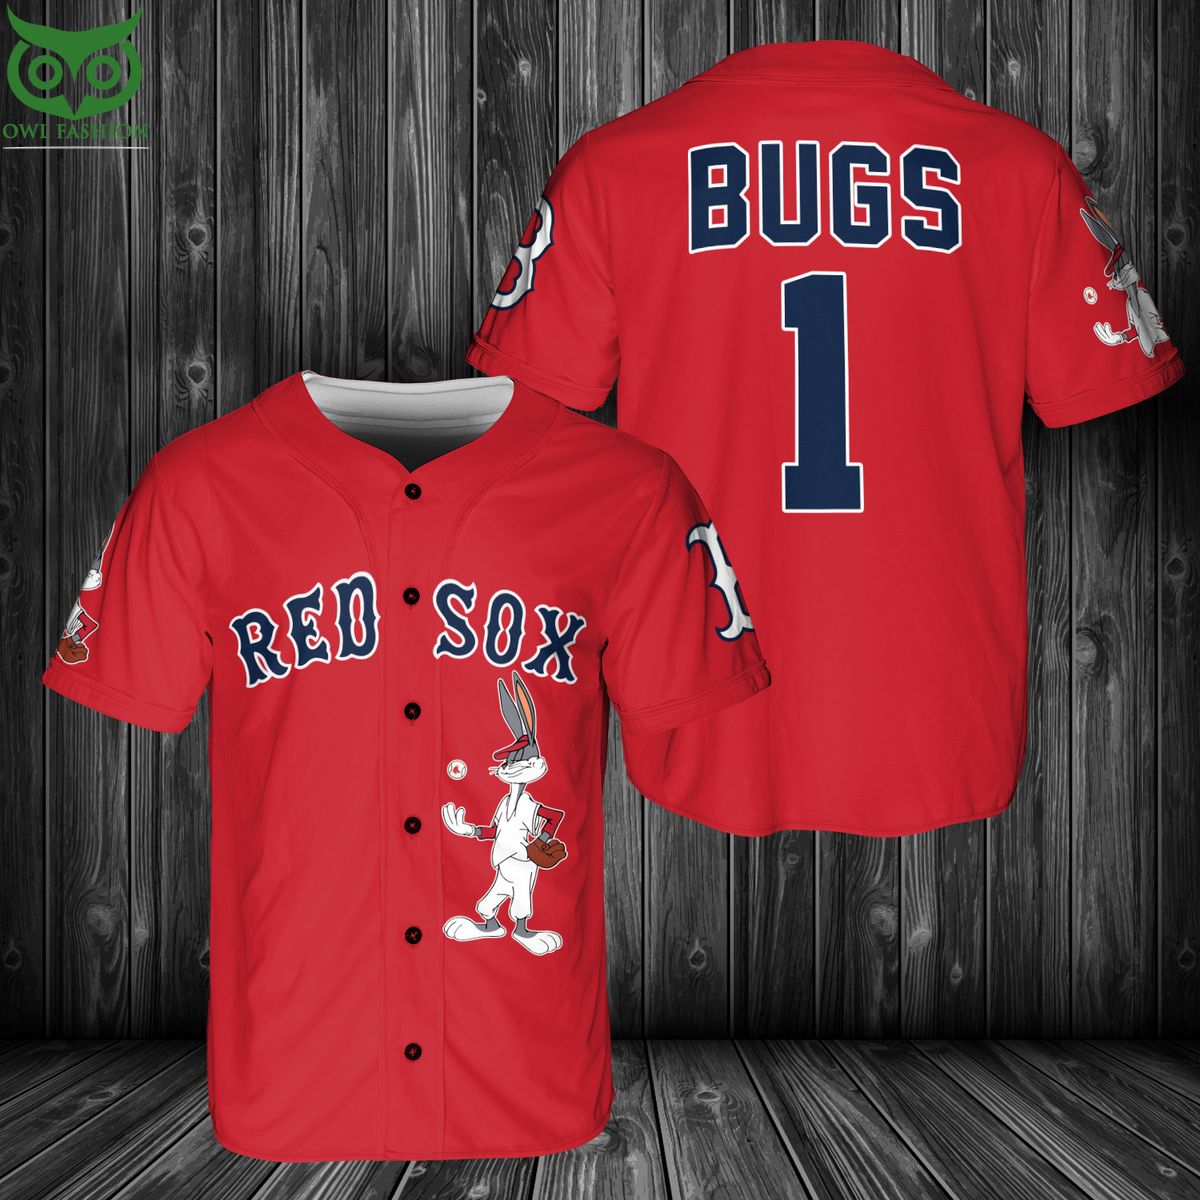 MLB Boston Red Sox Bugs Bunny Baseball Jersey Shirt